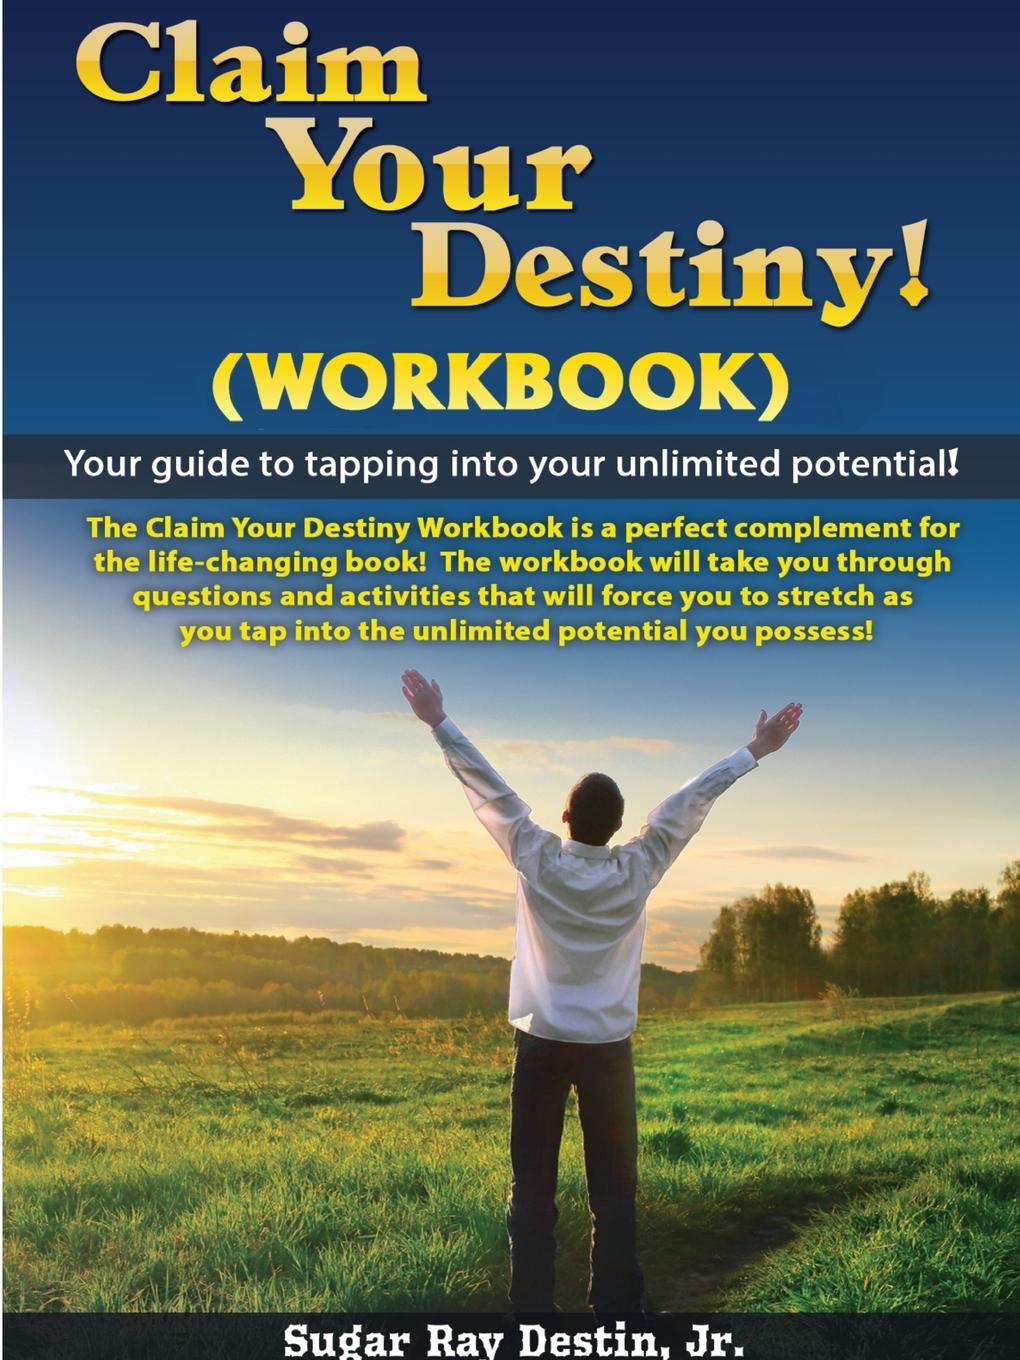 Jr. Sugar Ray Destin Claim Your Destiny Workbook